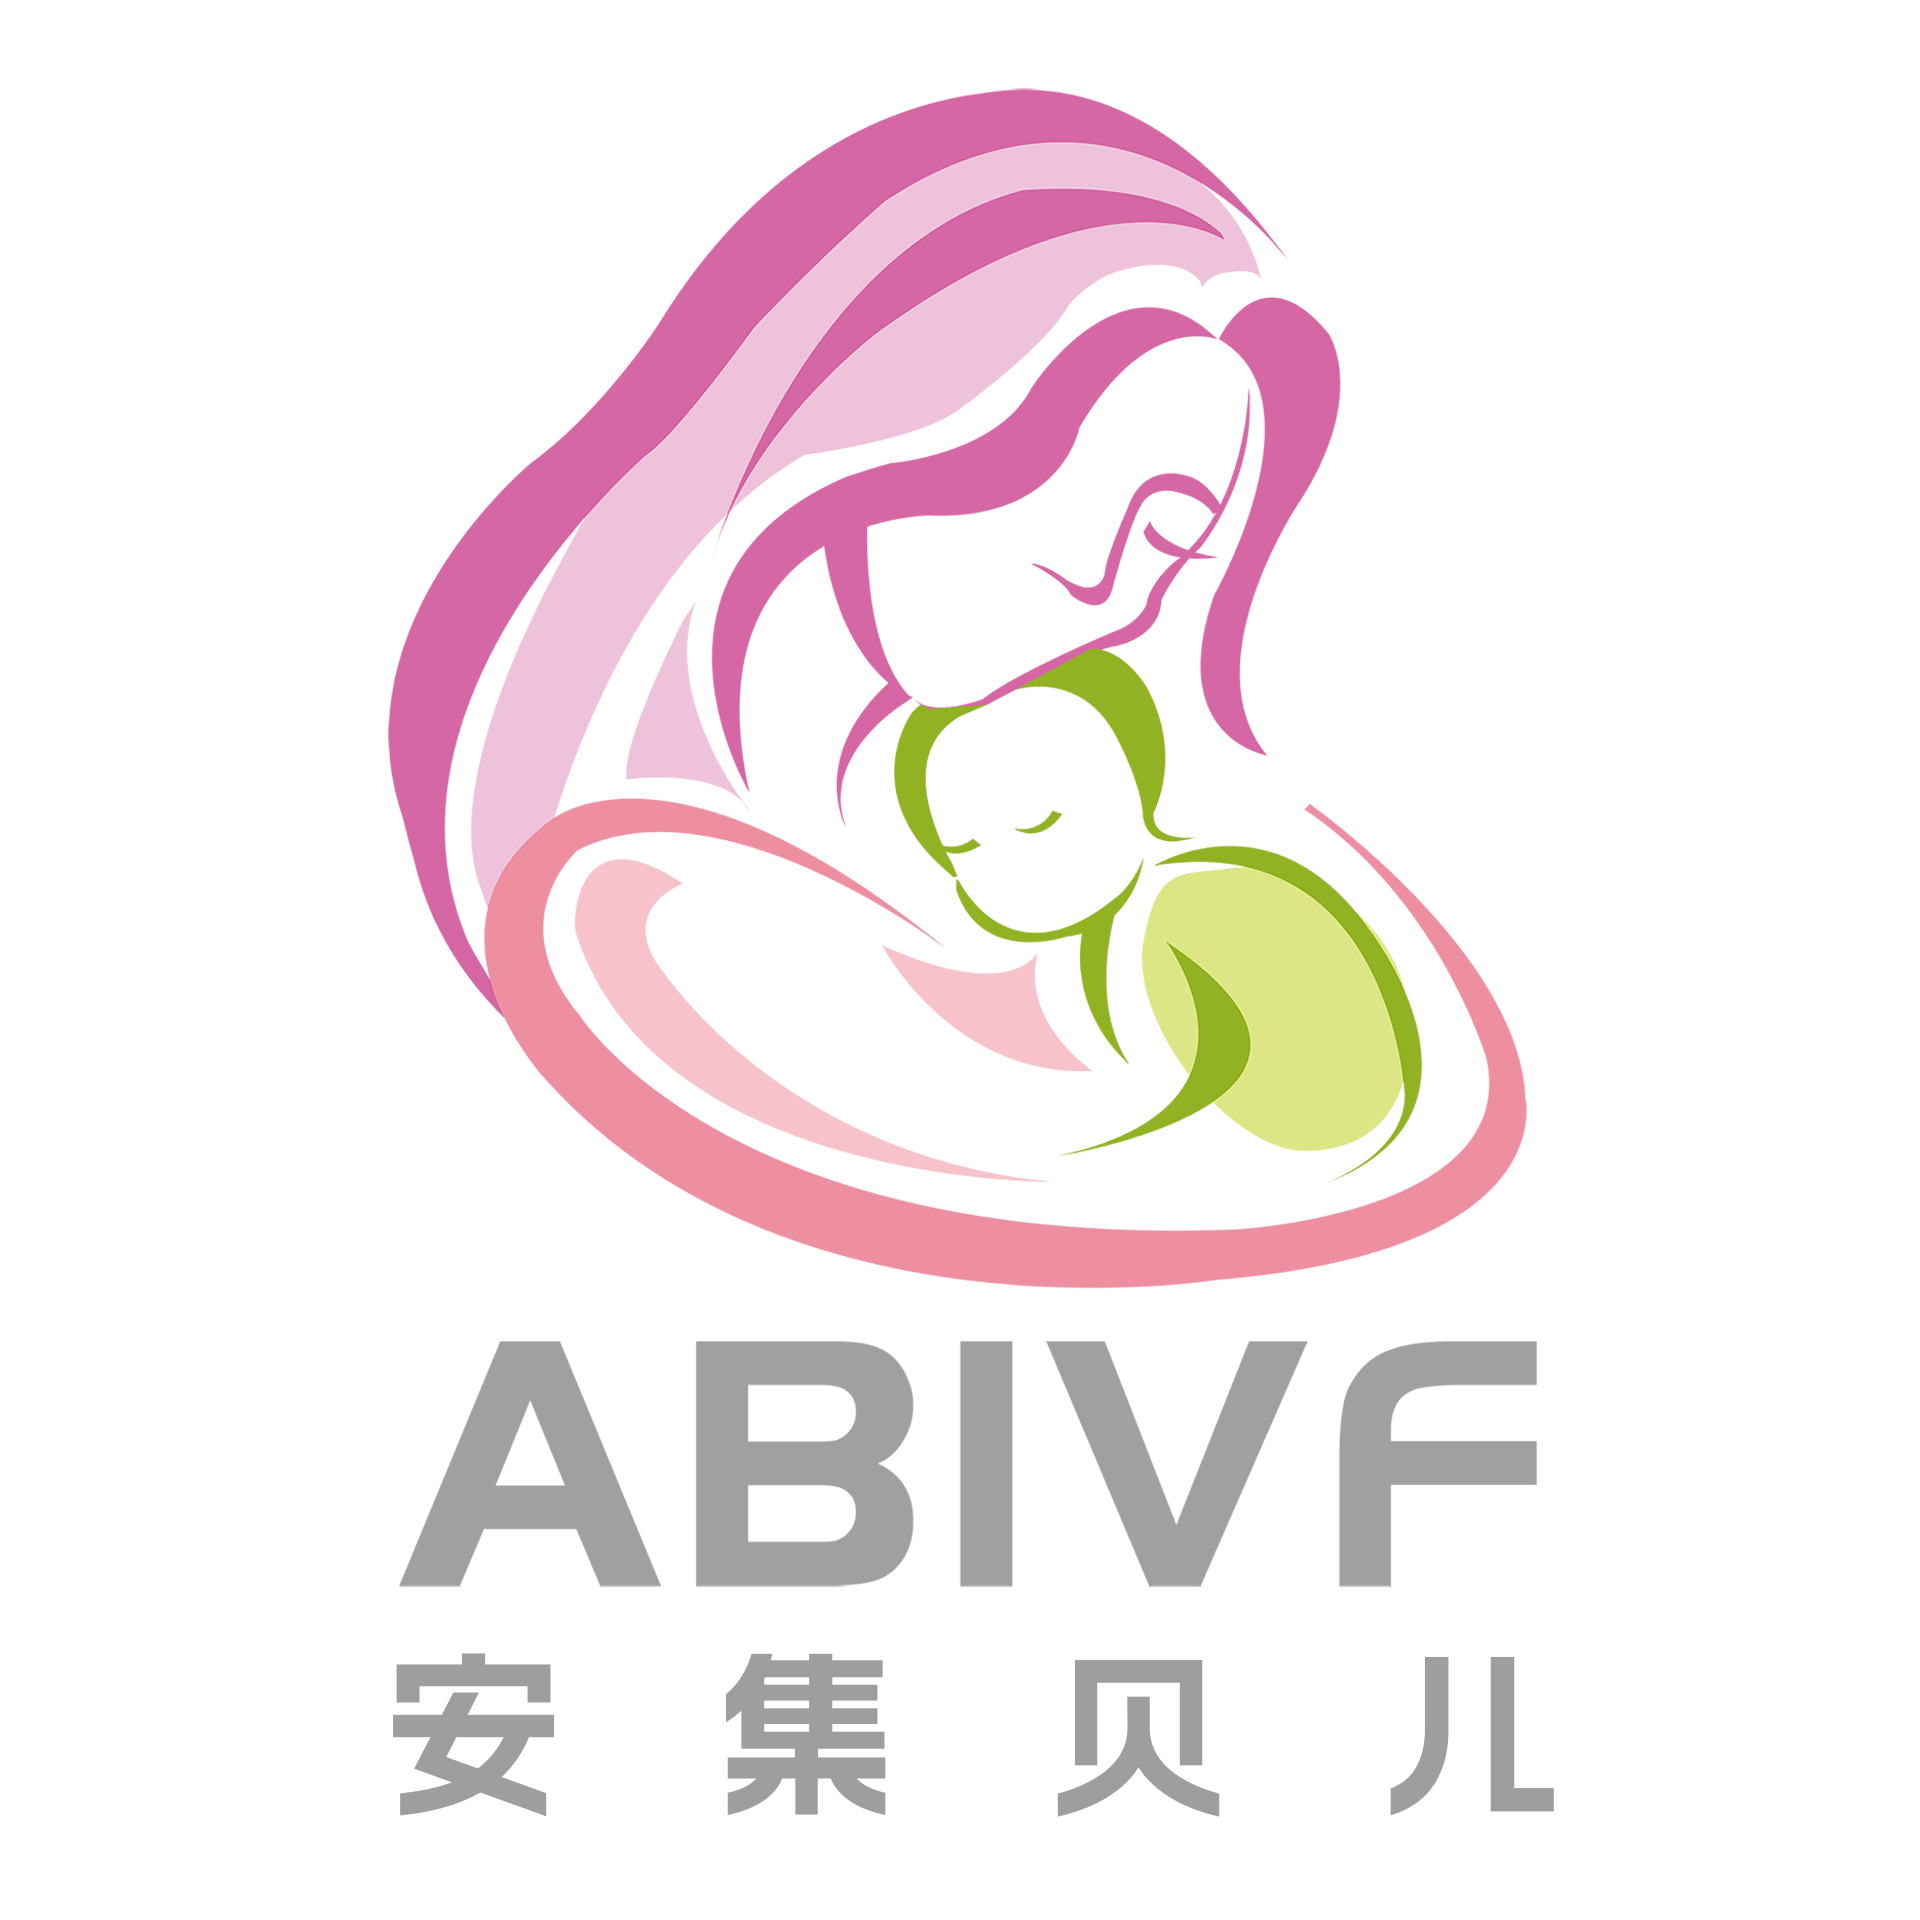 格鲁吉亚试管婴儿 IVF（In Vitro Fertilization）介绍